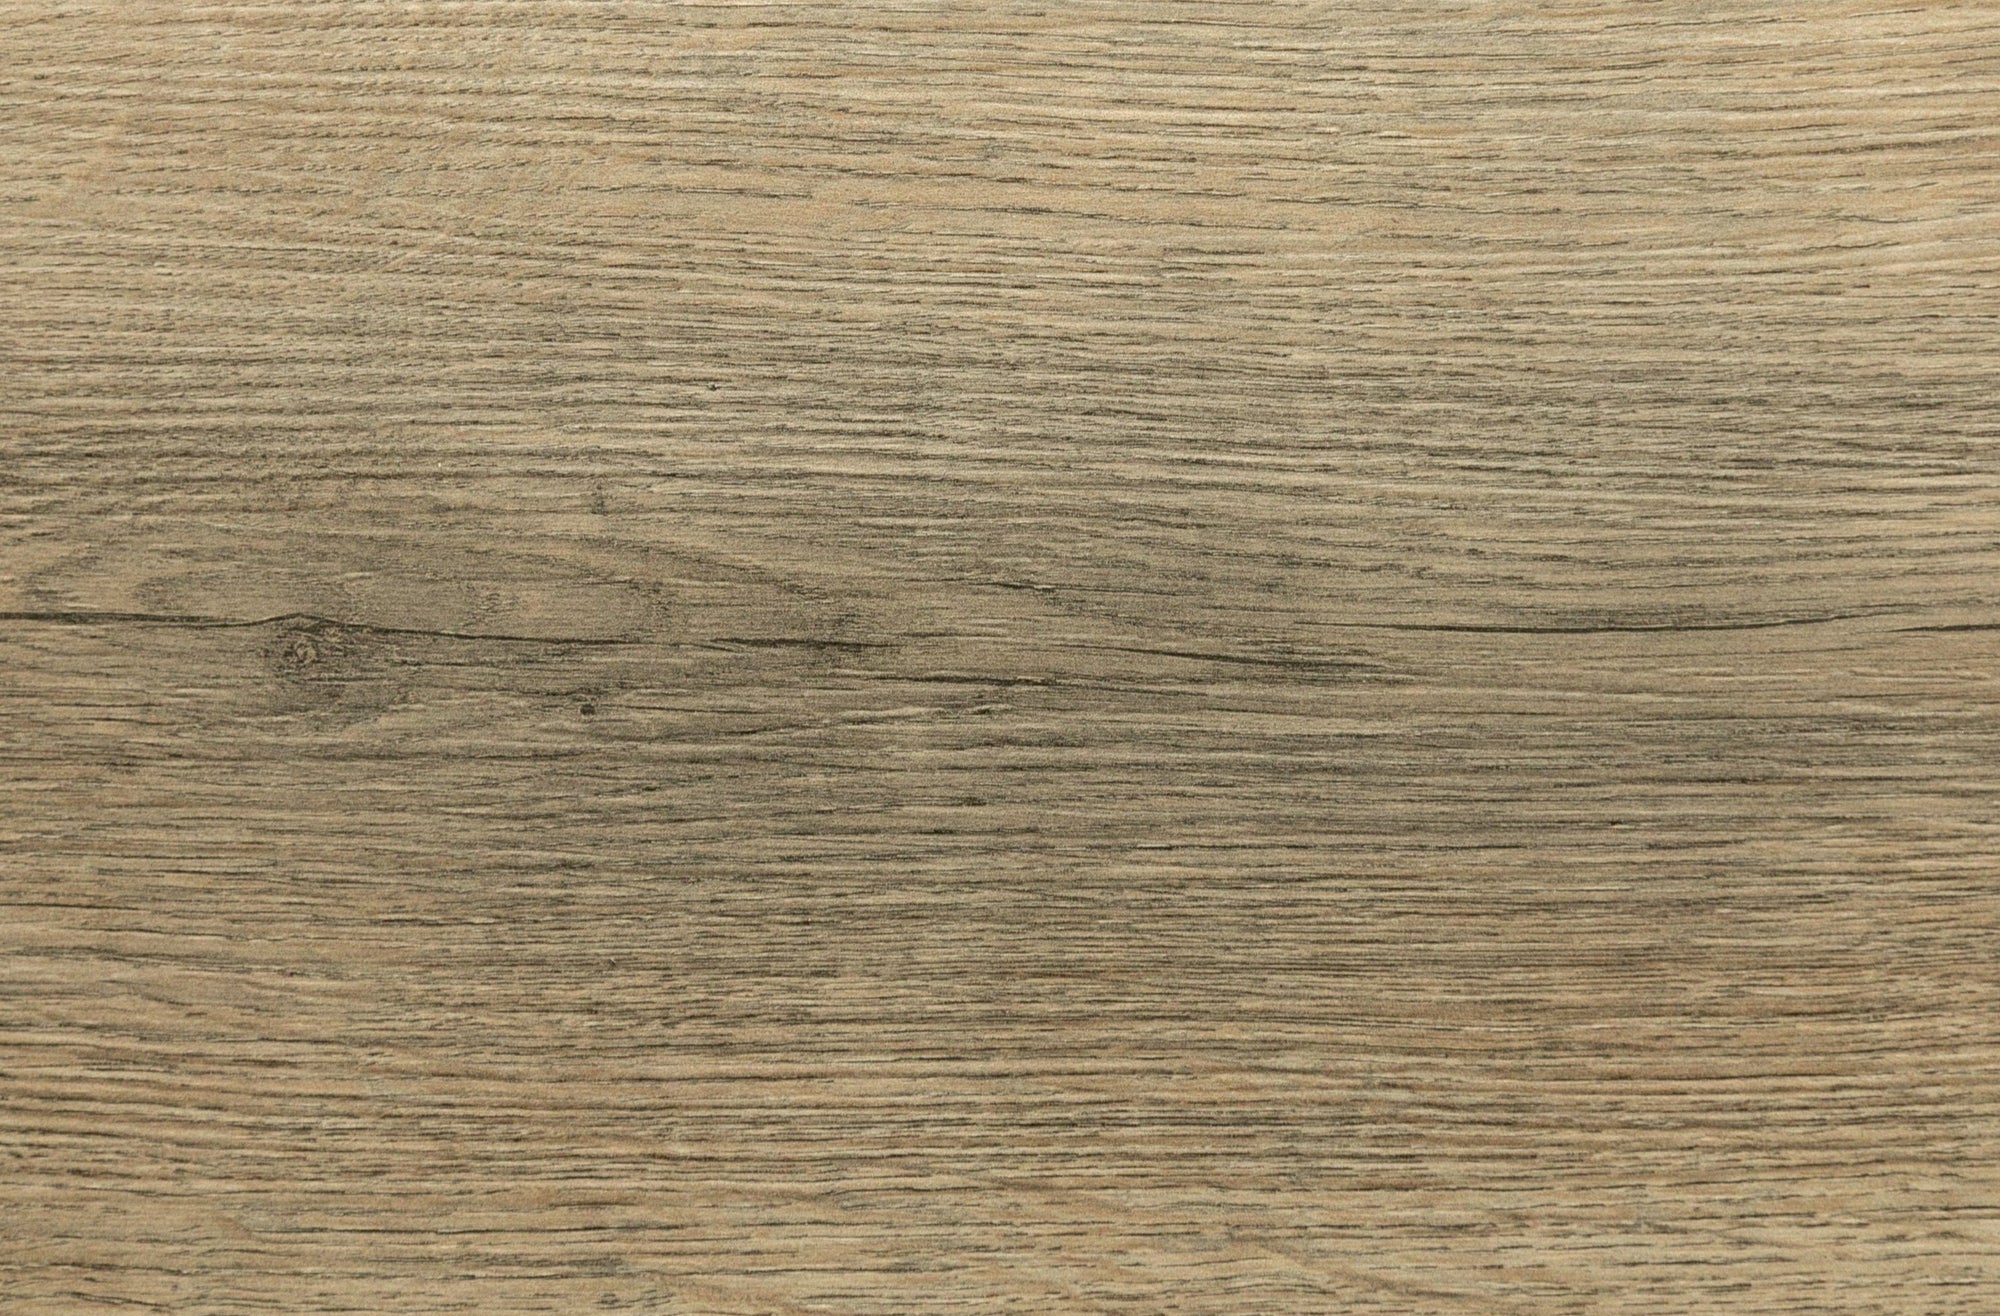 Free sample of Beveled Edge Adler Maverick engineered hardwood floor from our Maverick collection